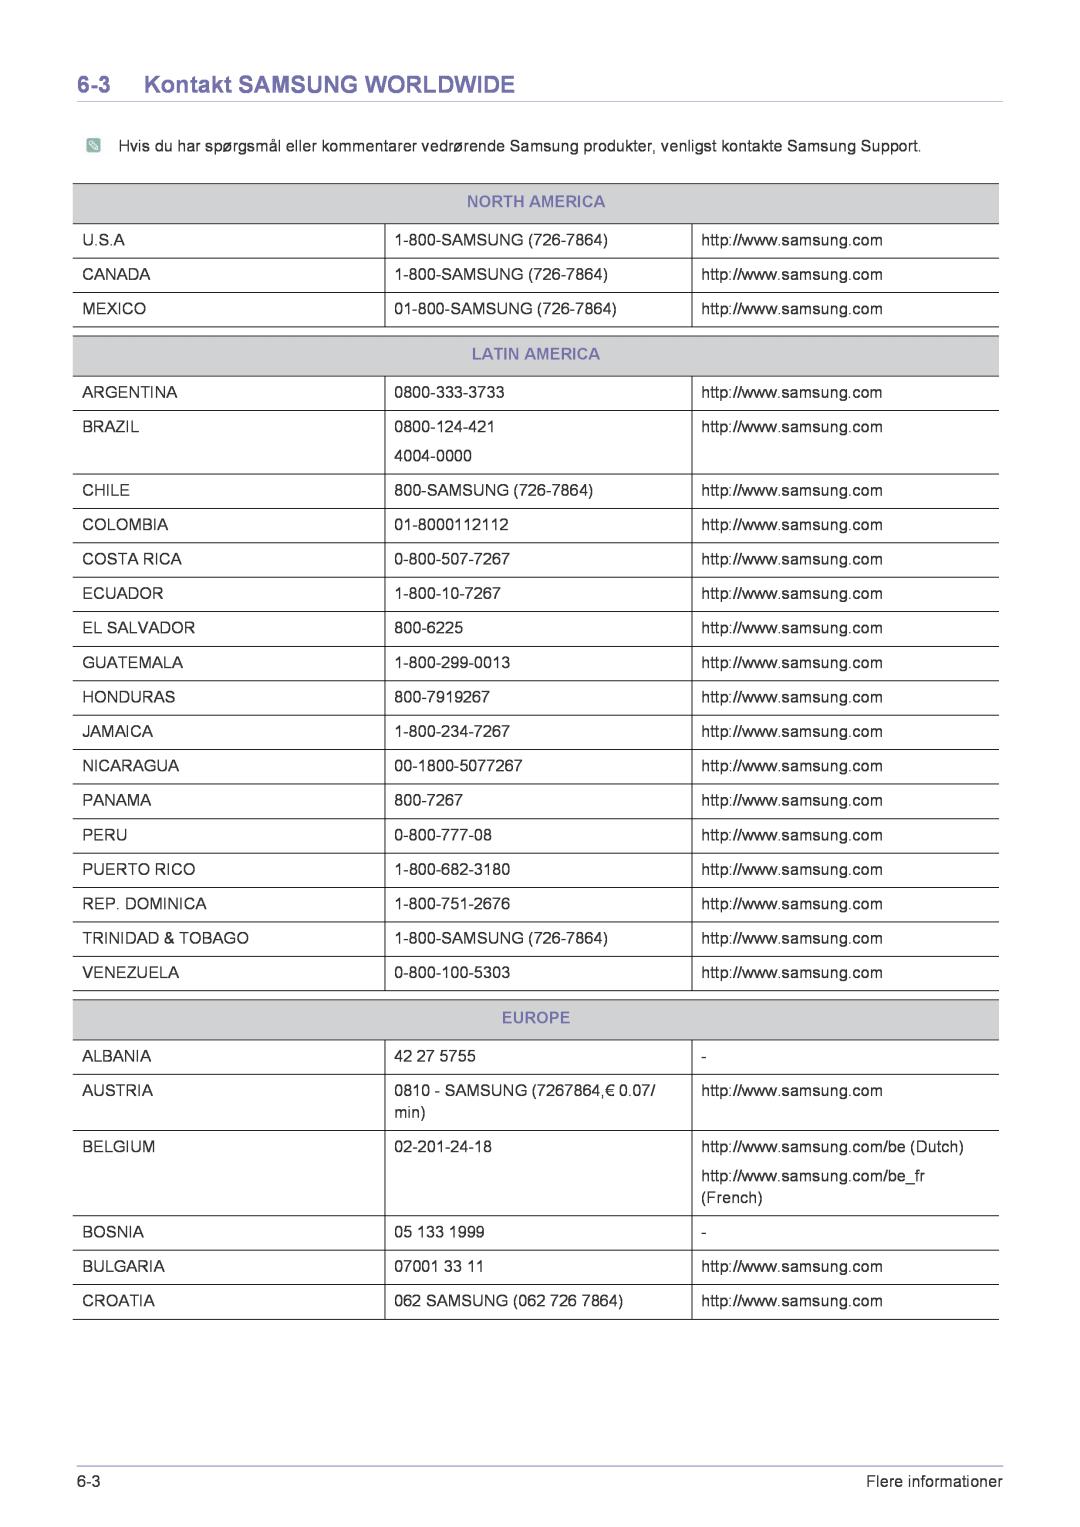 Samsung SP2553XWCX/EN manual Kontakt SAMSUNG WORLDWIDE, North America, Latin America, Europe 